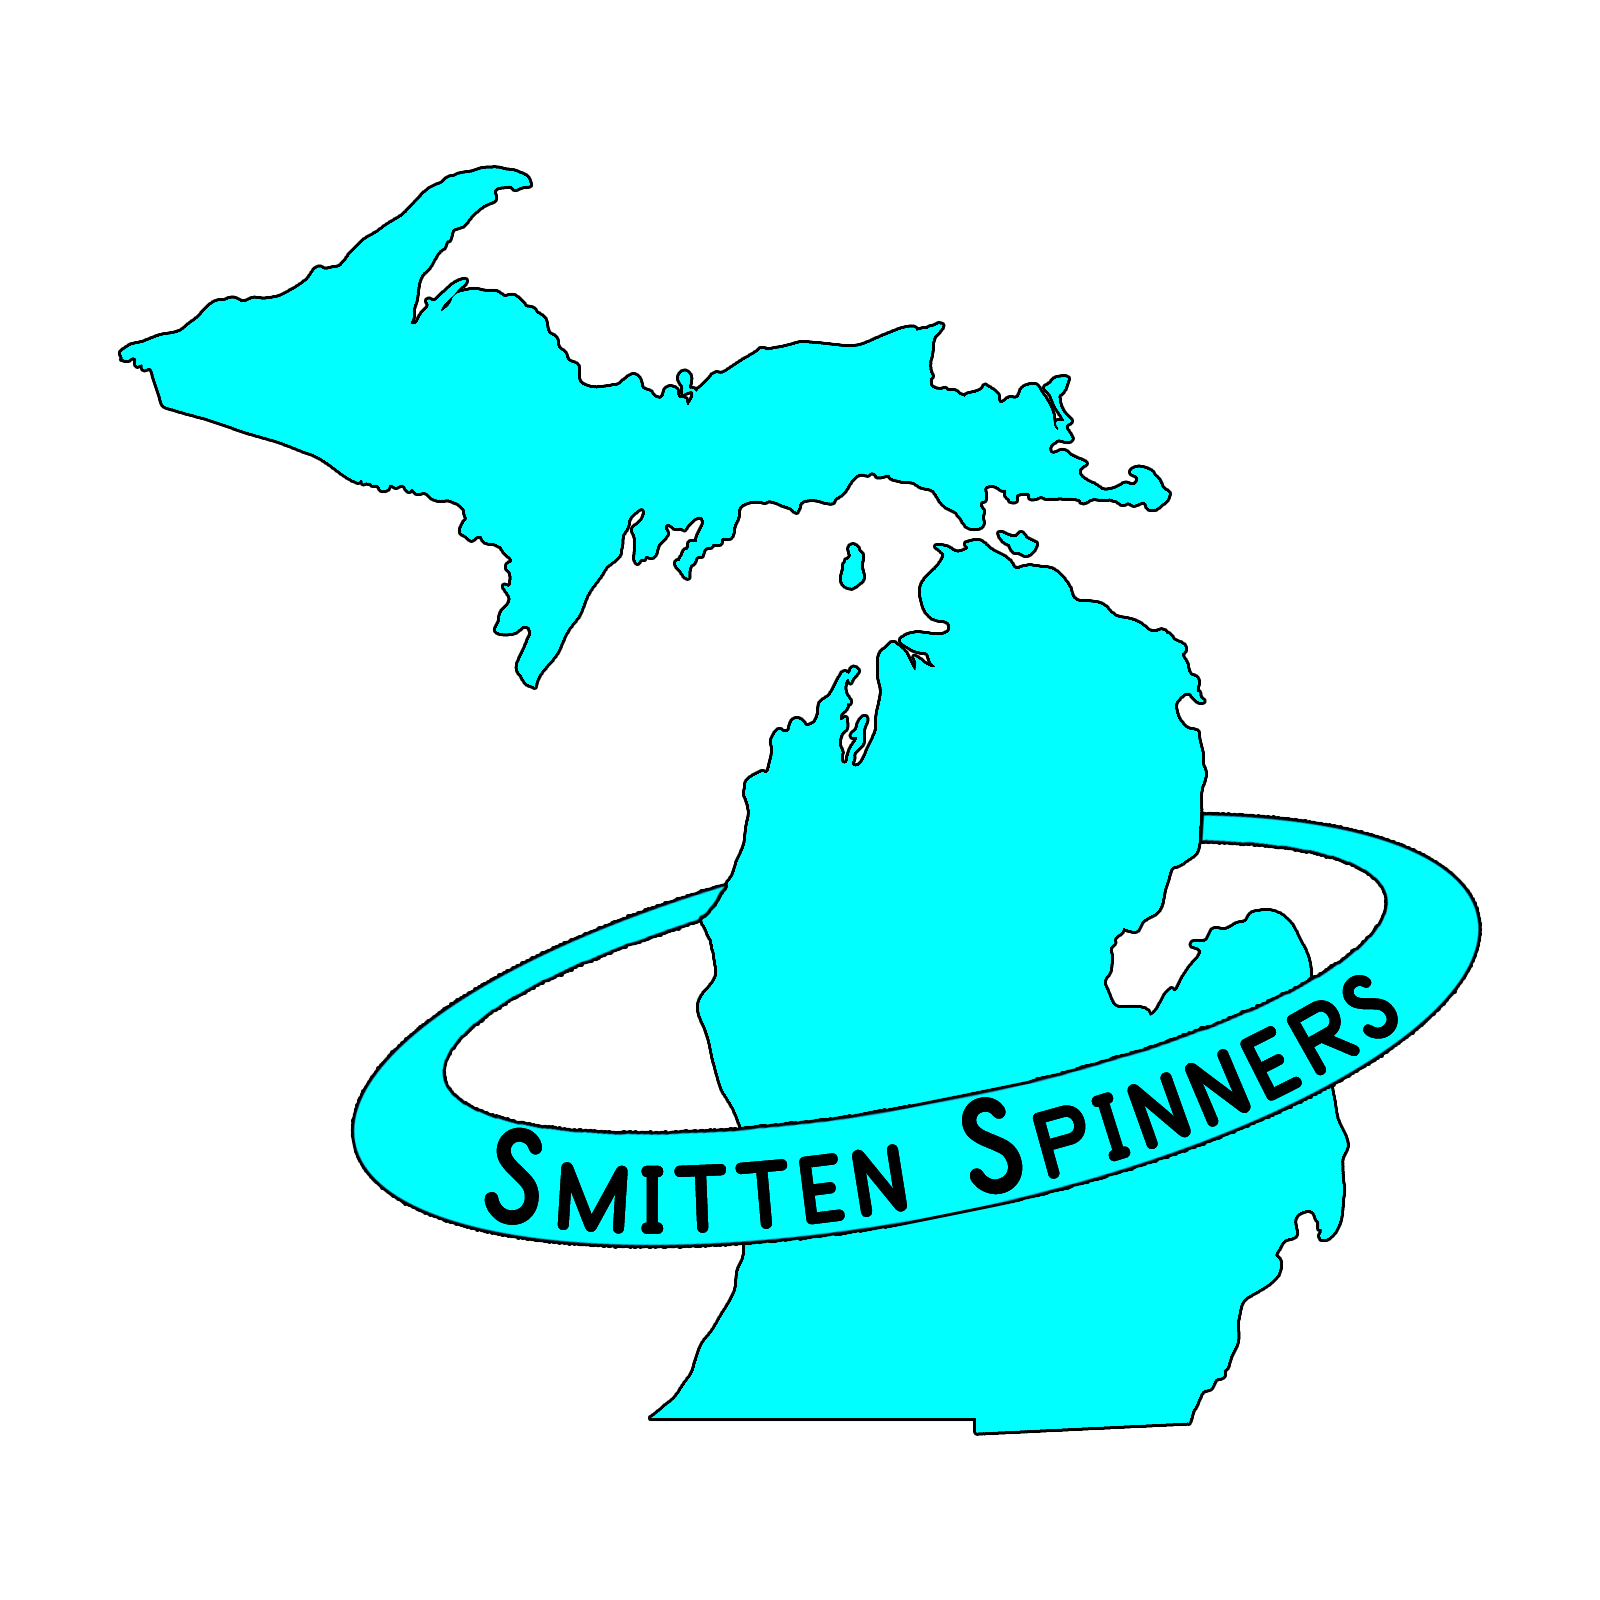 Smitten Spinners